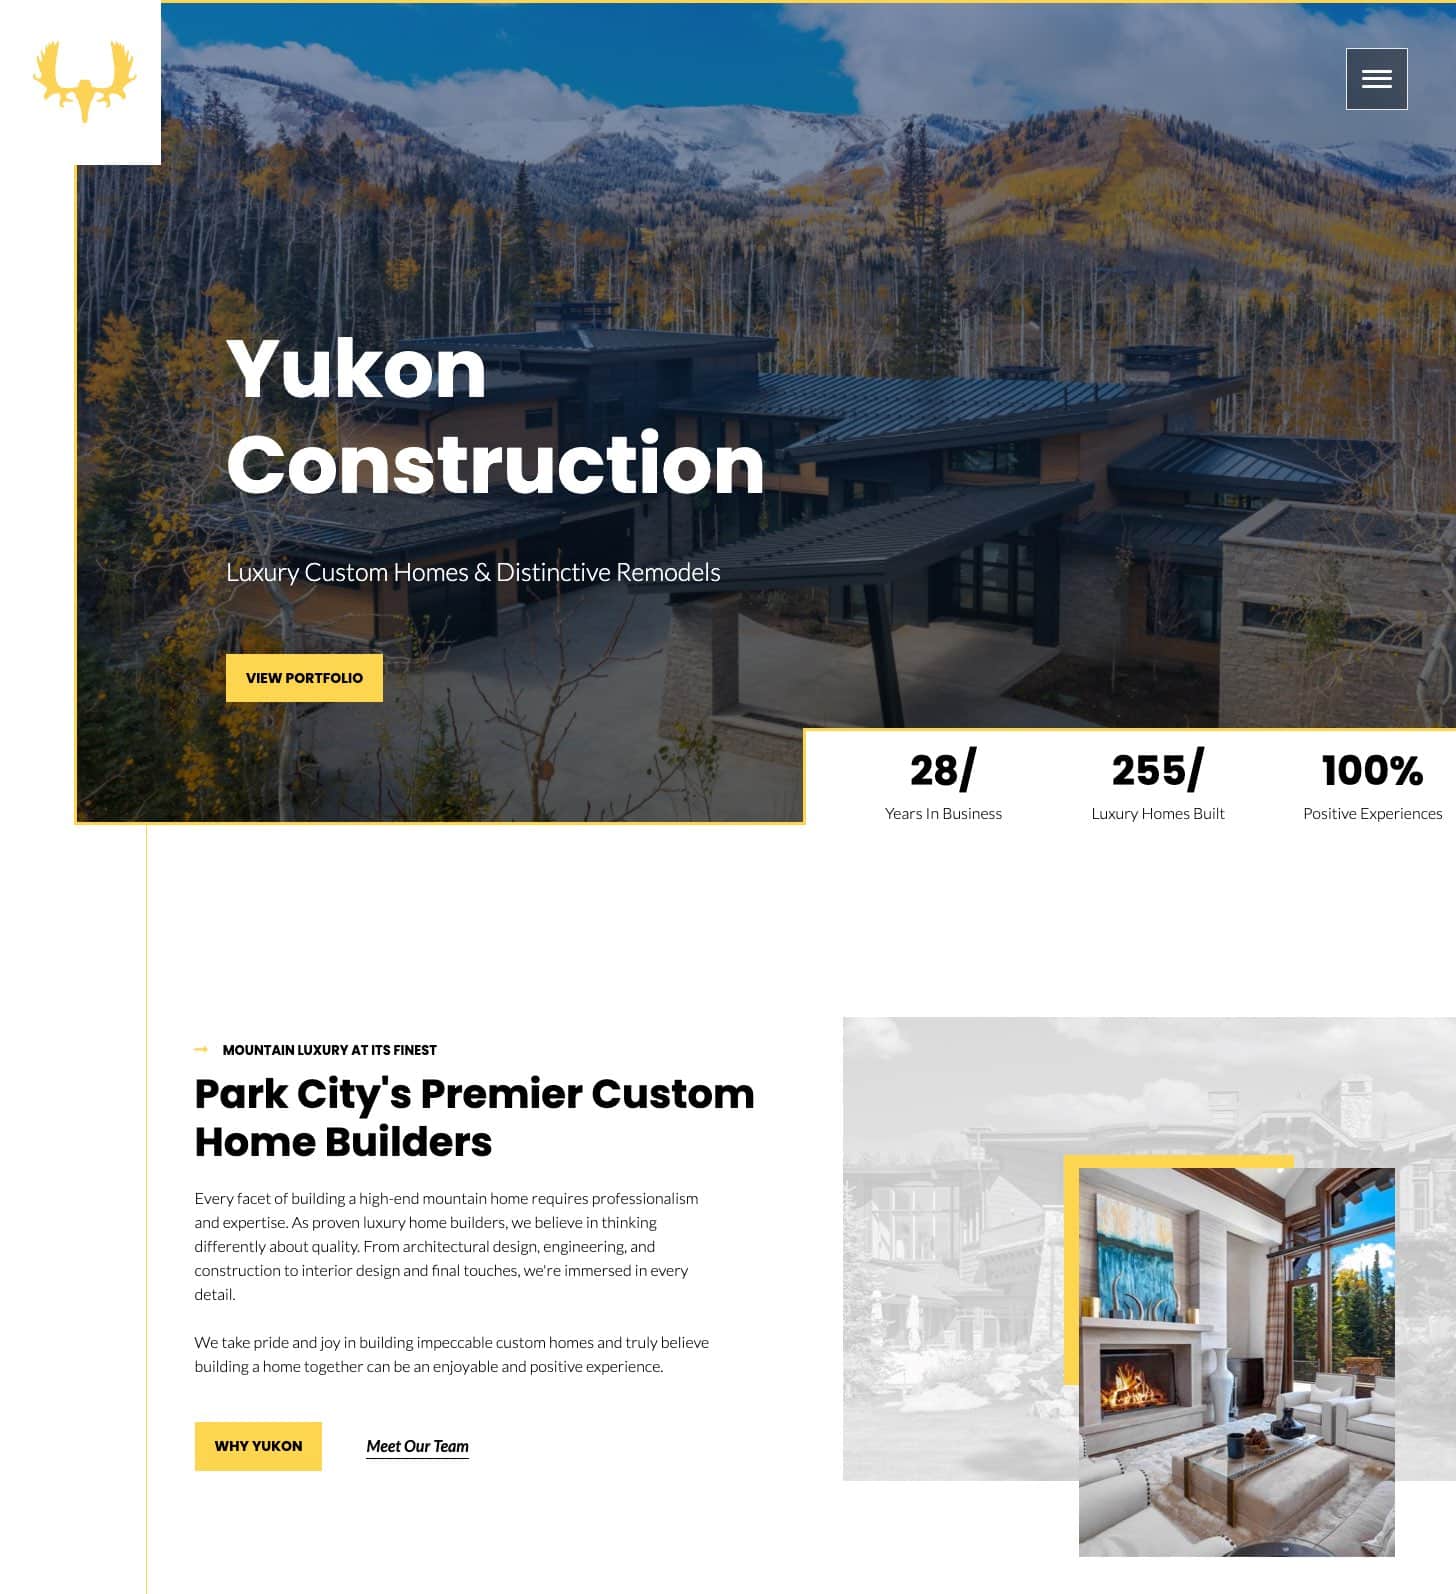 Yukon Construction, Desktop After Spigot Redesign, Park City